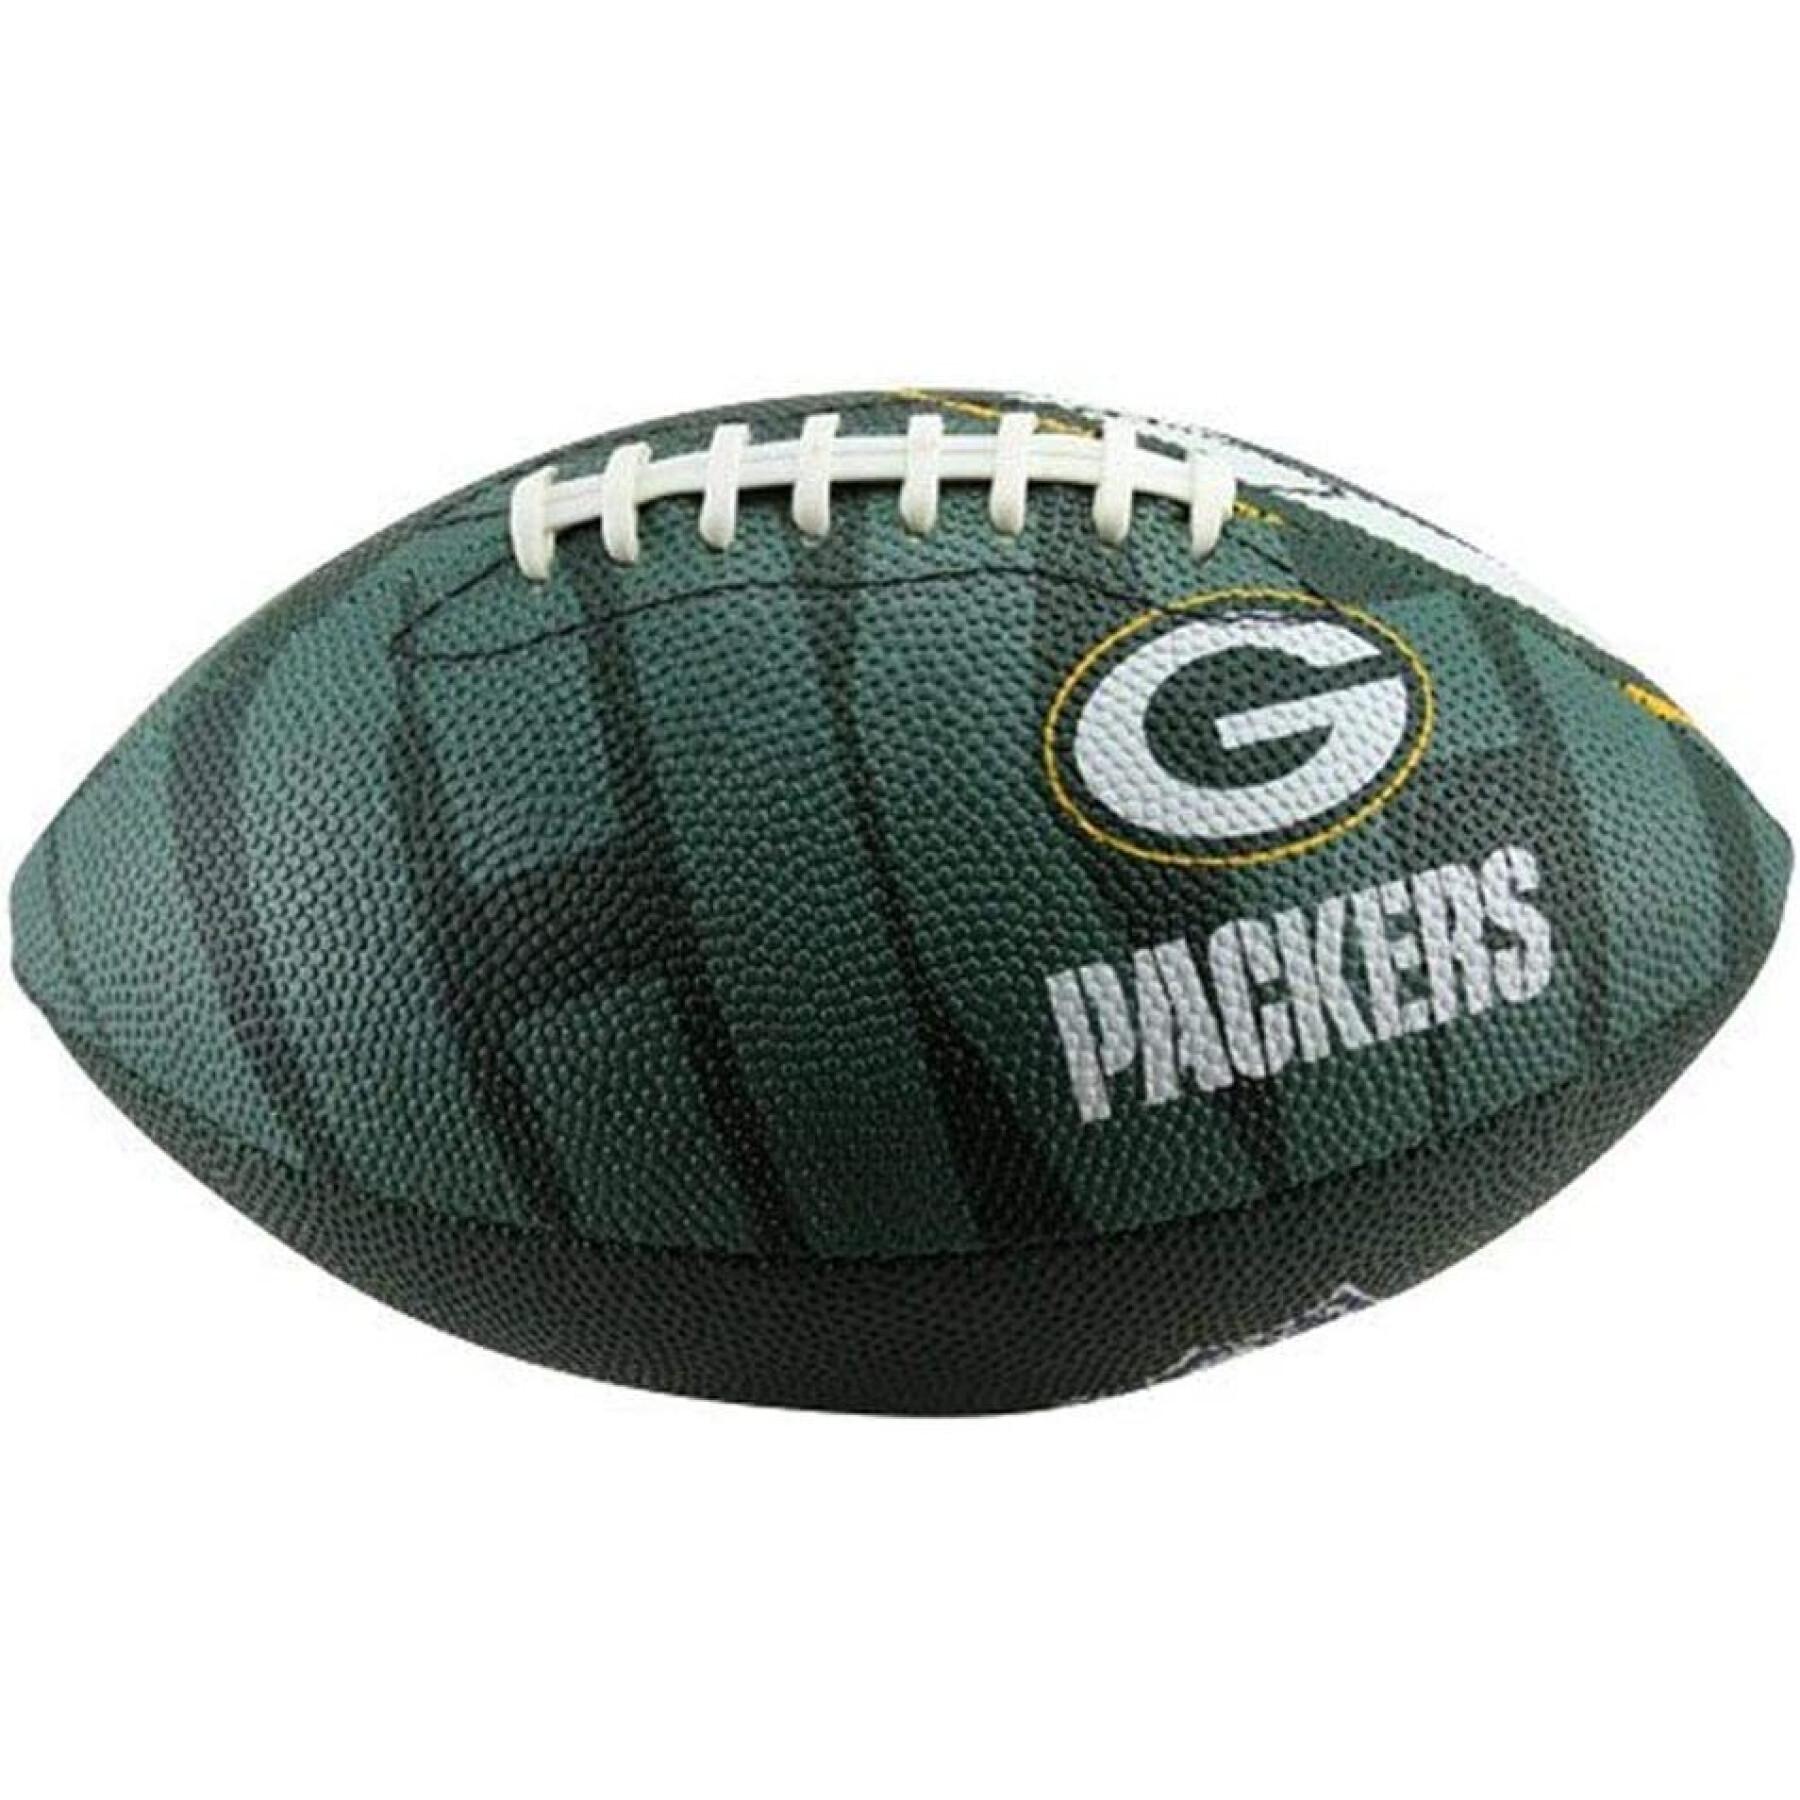 Balón niños Wilson Packers NFL Logo